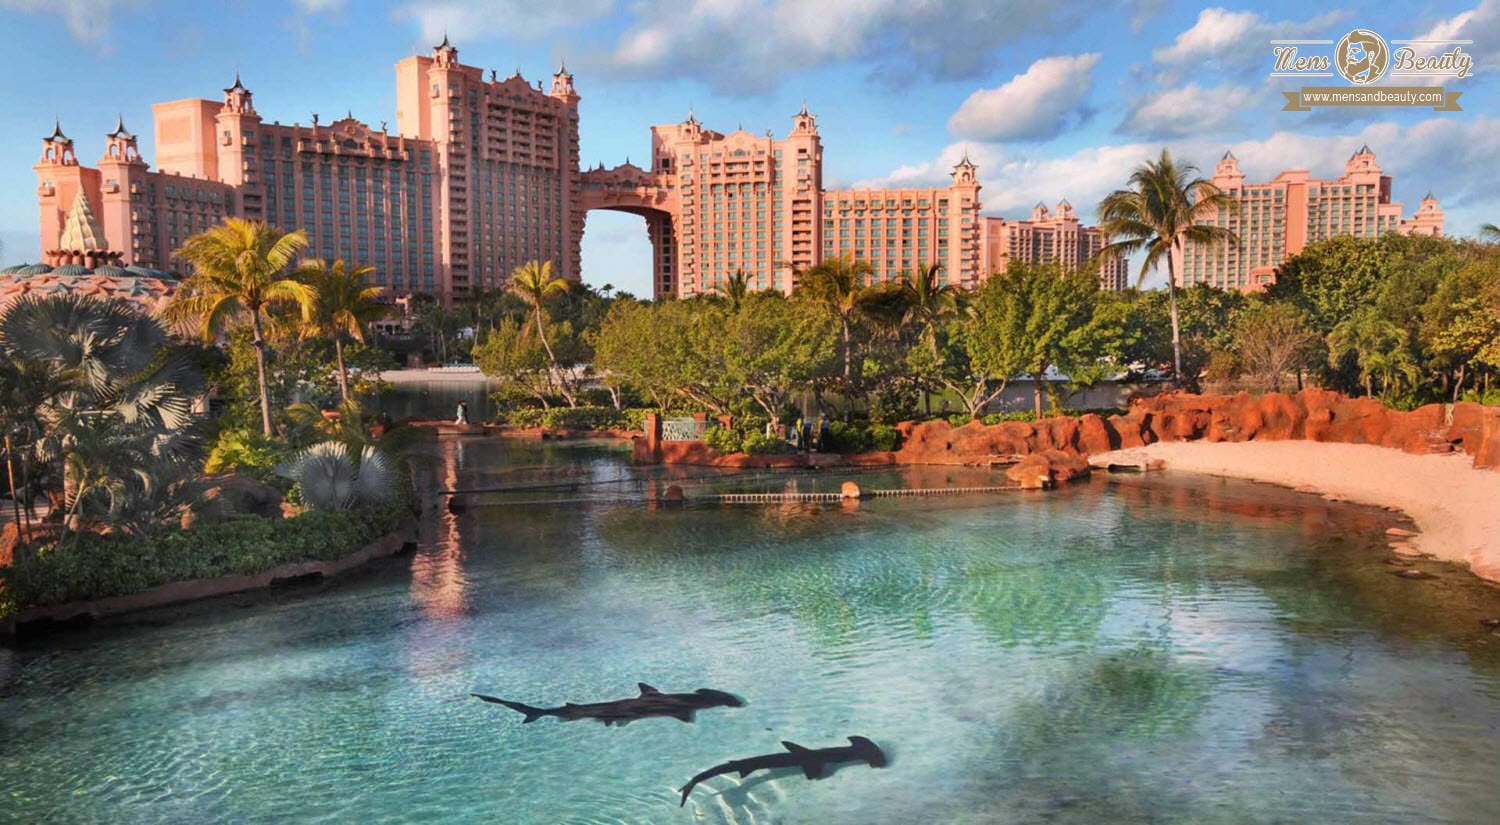 mejores casinos famosos mundo casino resort the atlantis paradise island bahamas